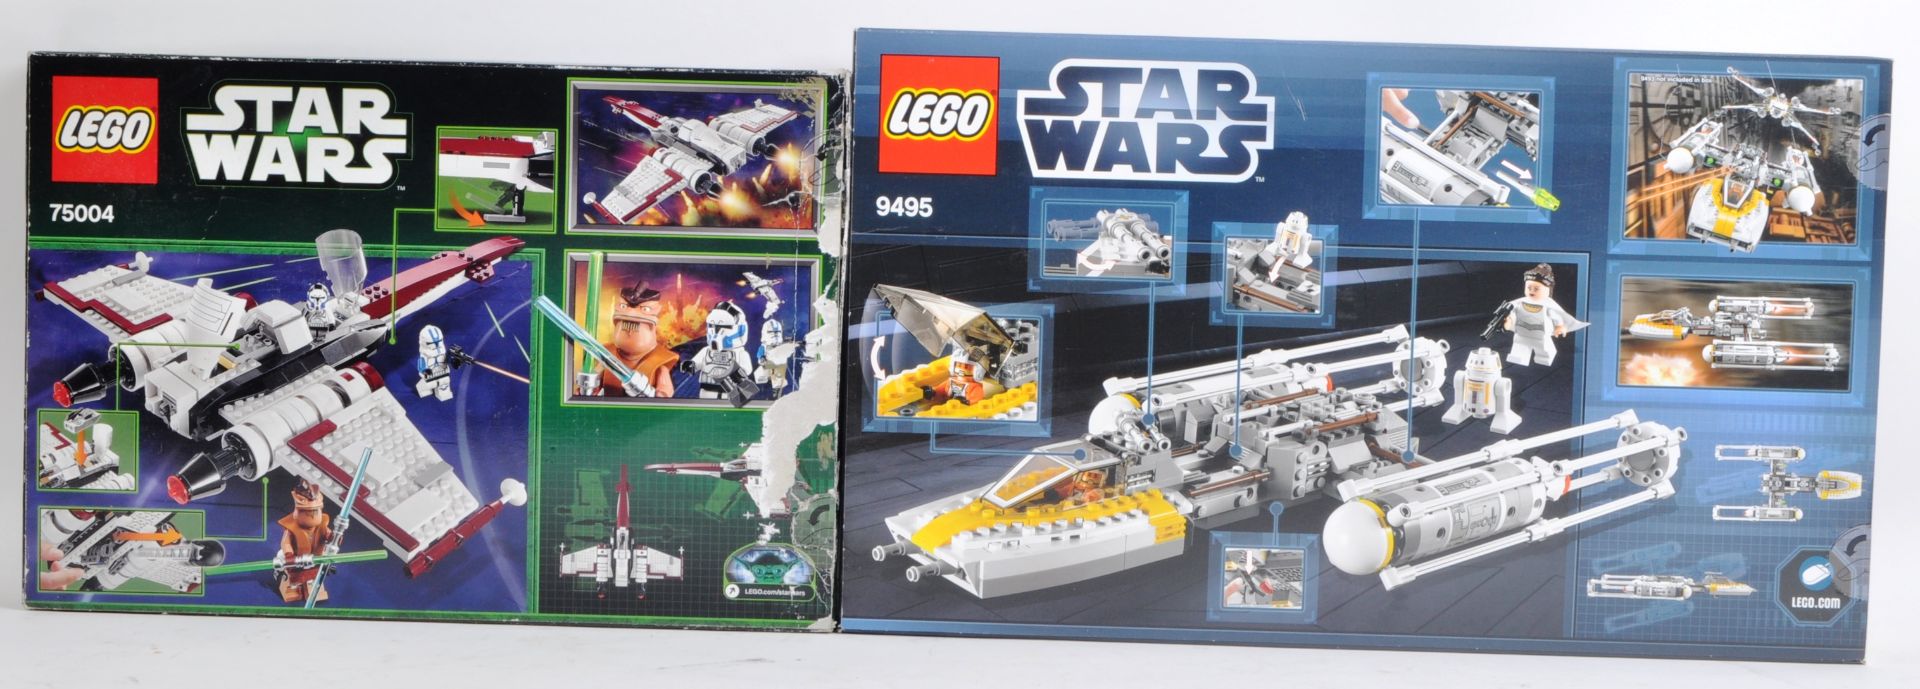 LEGO SETS - LEGO STAR WARS - 75004 / 9495 - Image 2 of 4